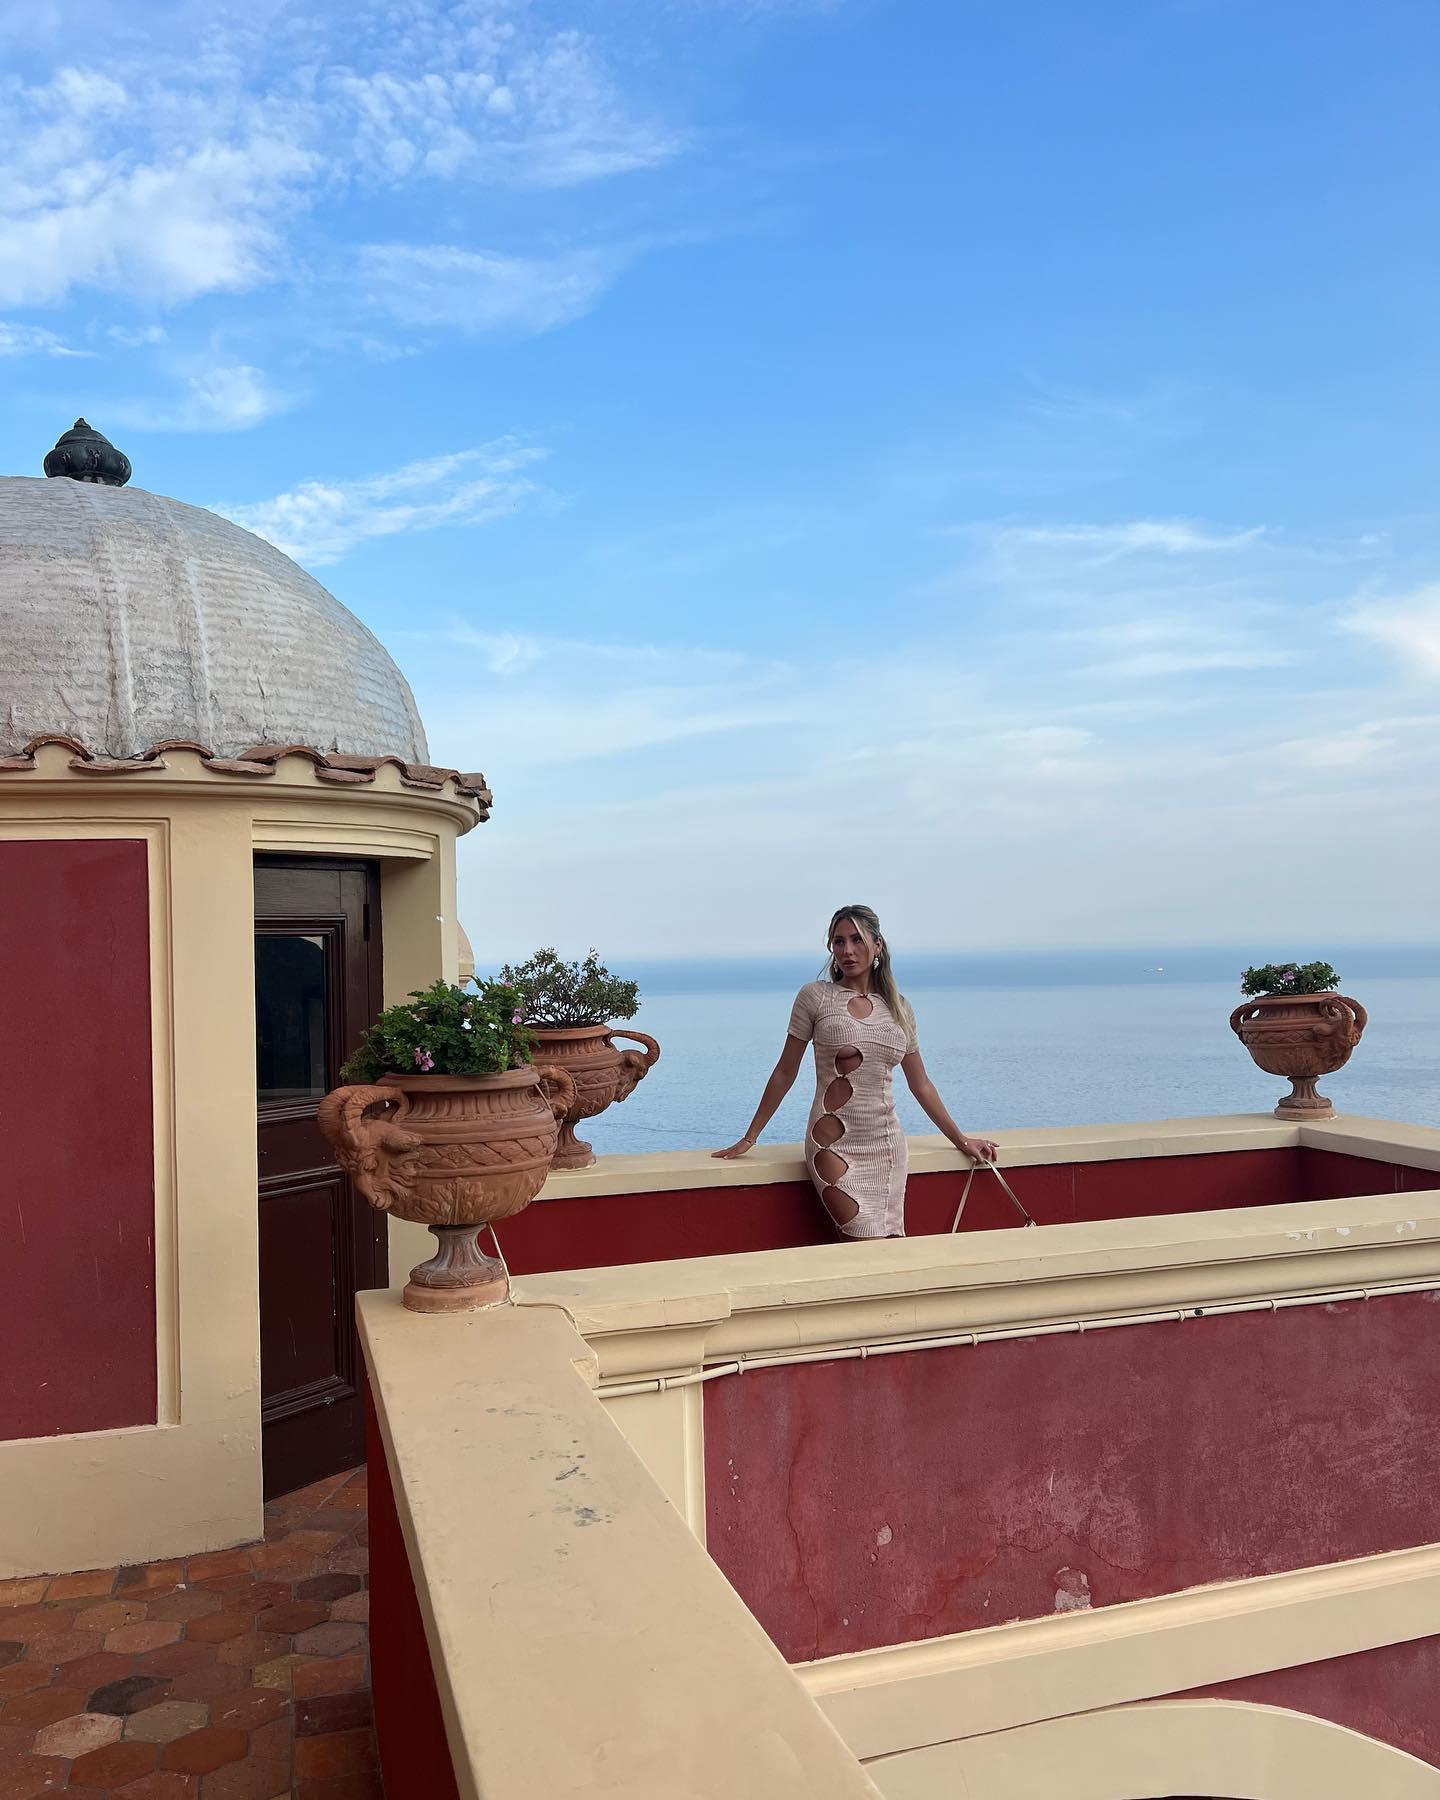 Tiktok Star Alix Earle Soaks Up The Sun In Italy In Her Little Bikini 9731